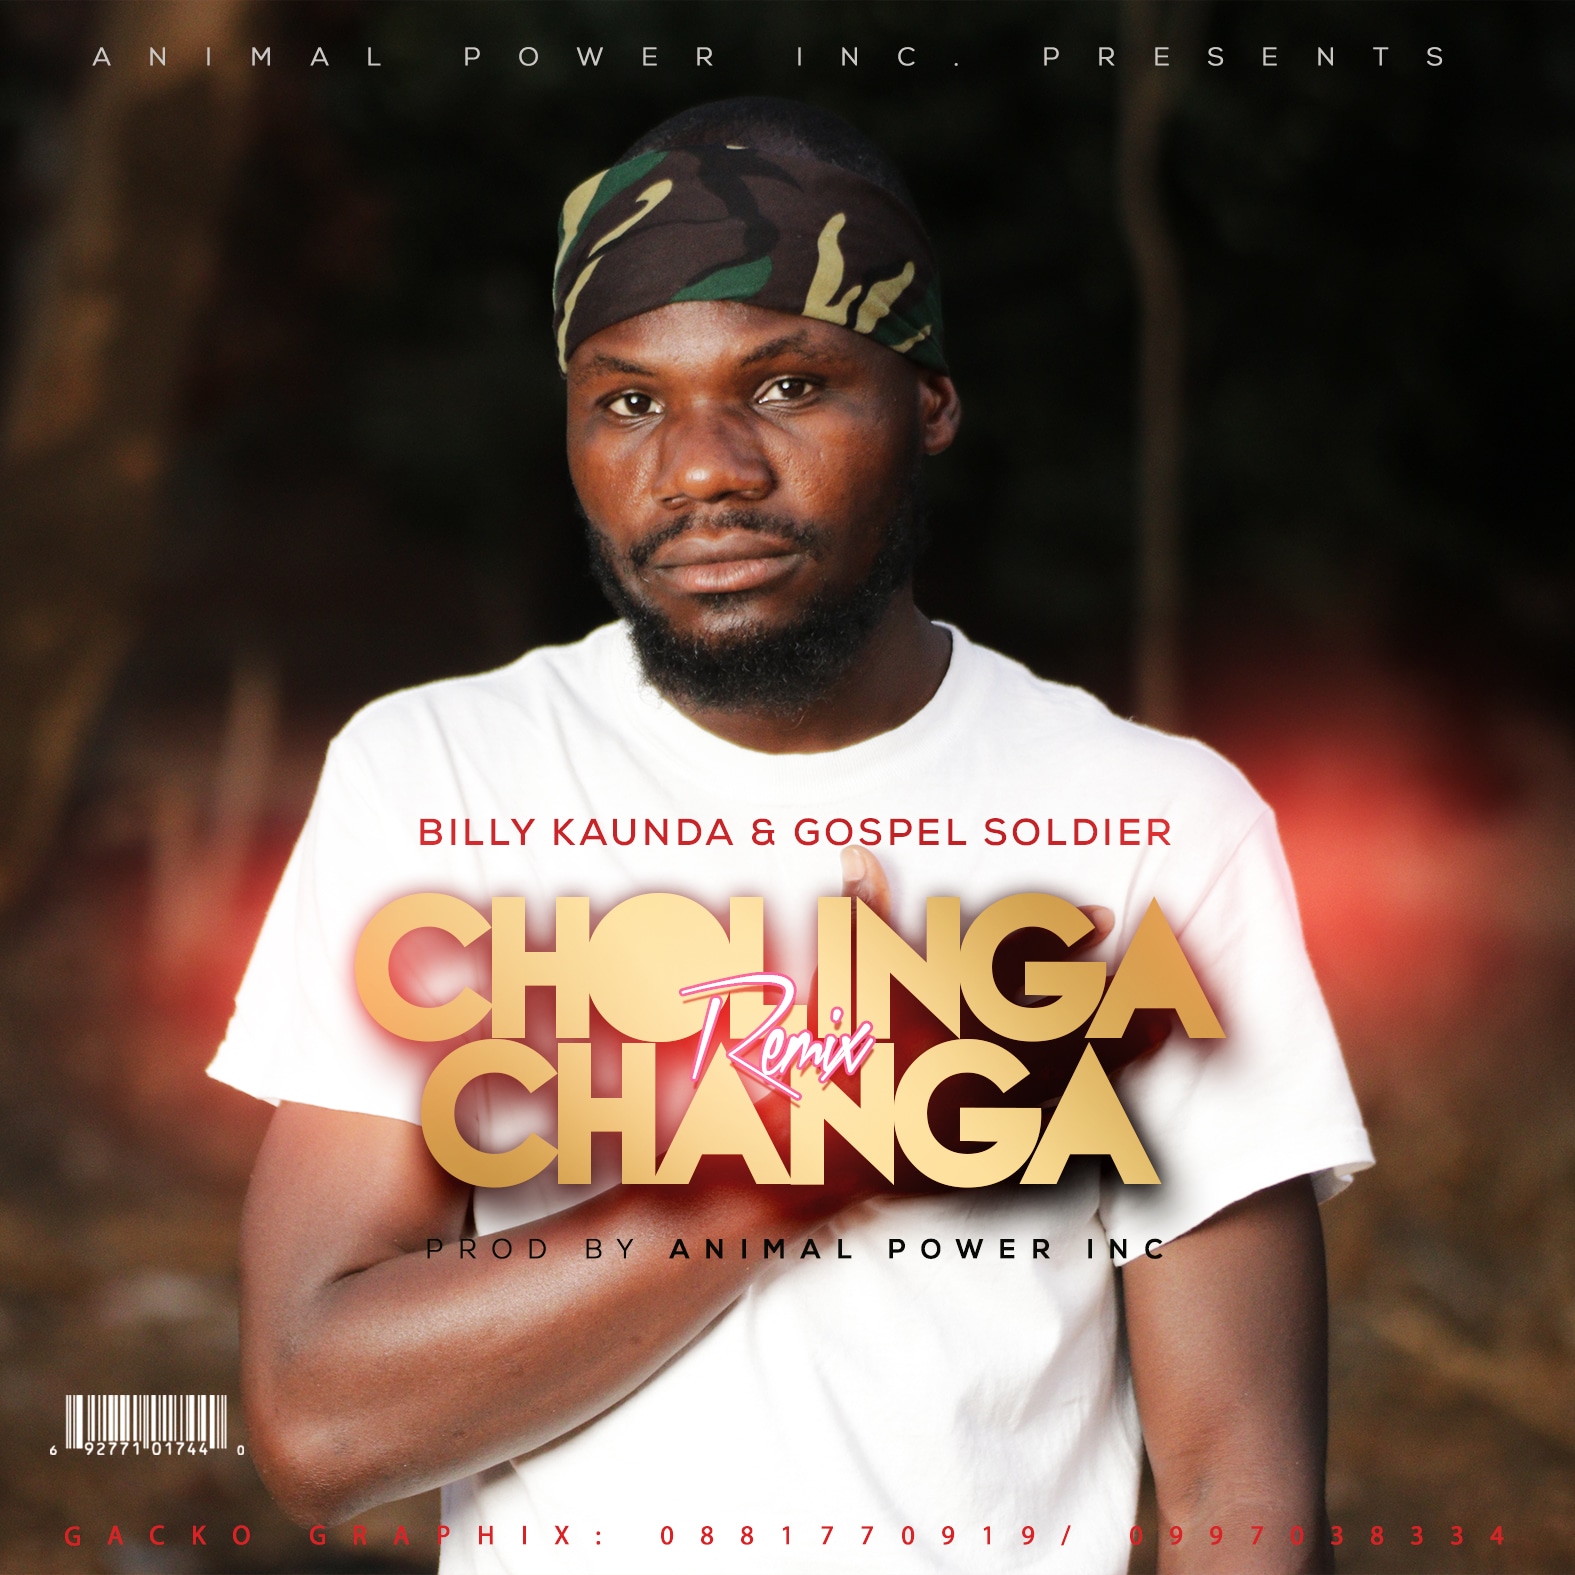 Billy Kaunda and Gospel Soldier - Cholinga Changa Remix (Prod By Animal Power)